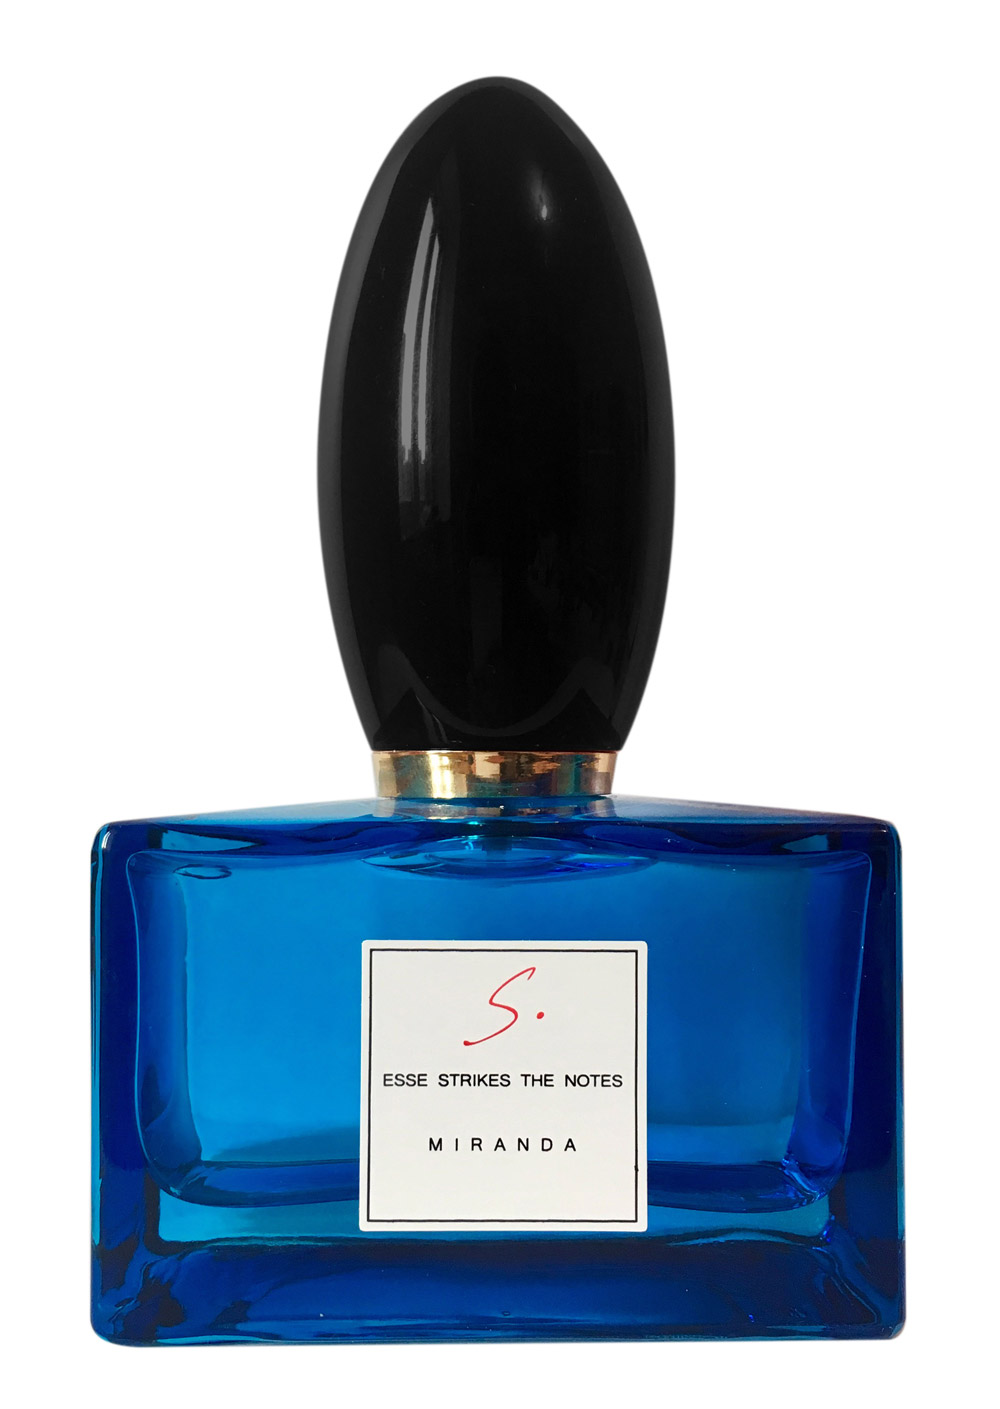 Miranda Esse Strikes The Notes perfume - a fragrance for women 2018